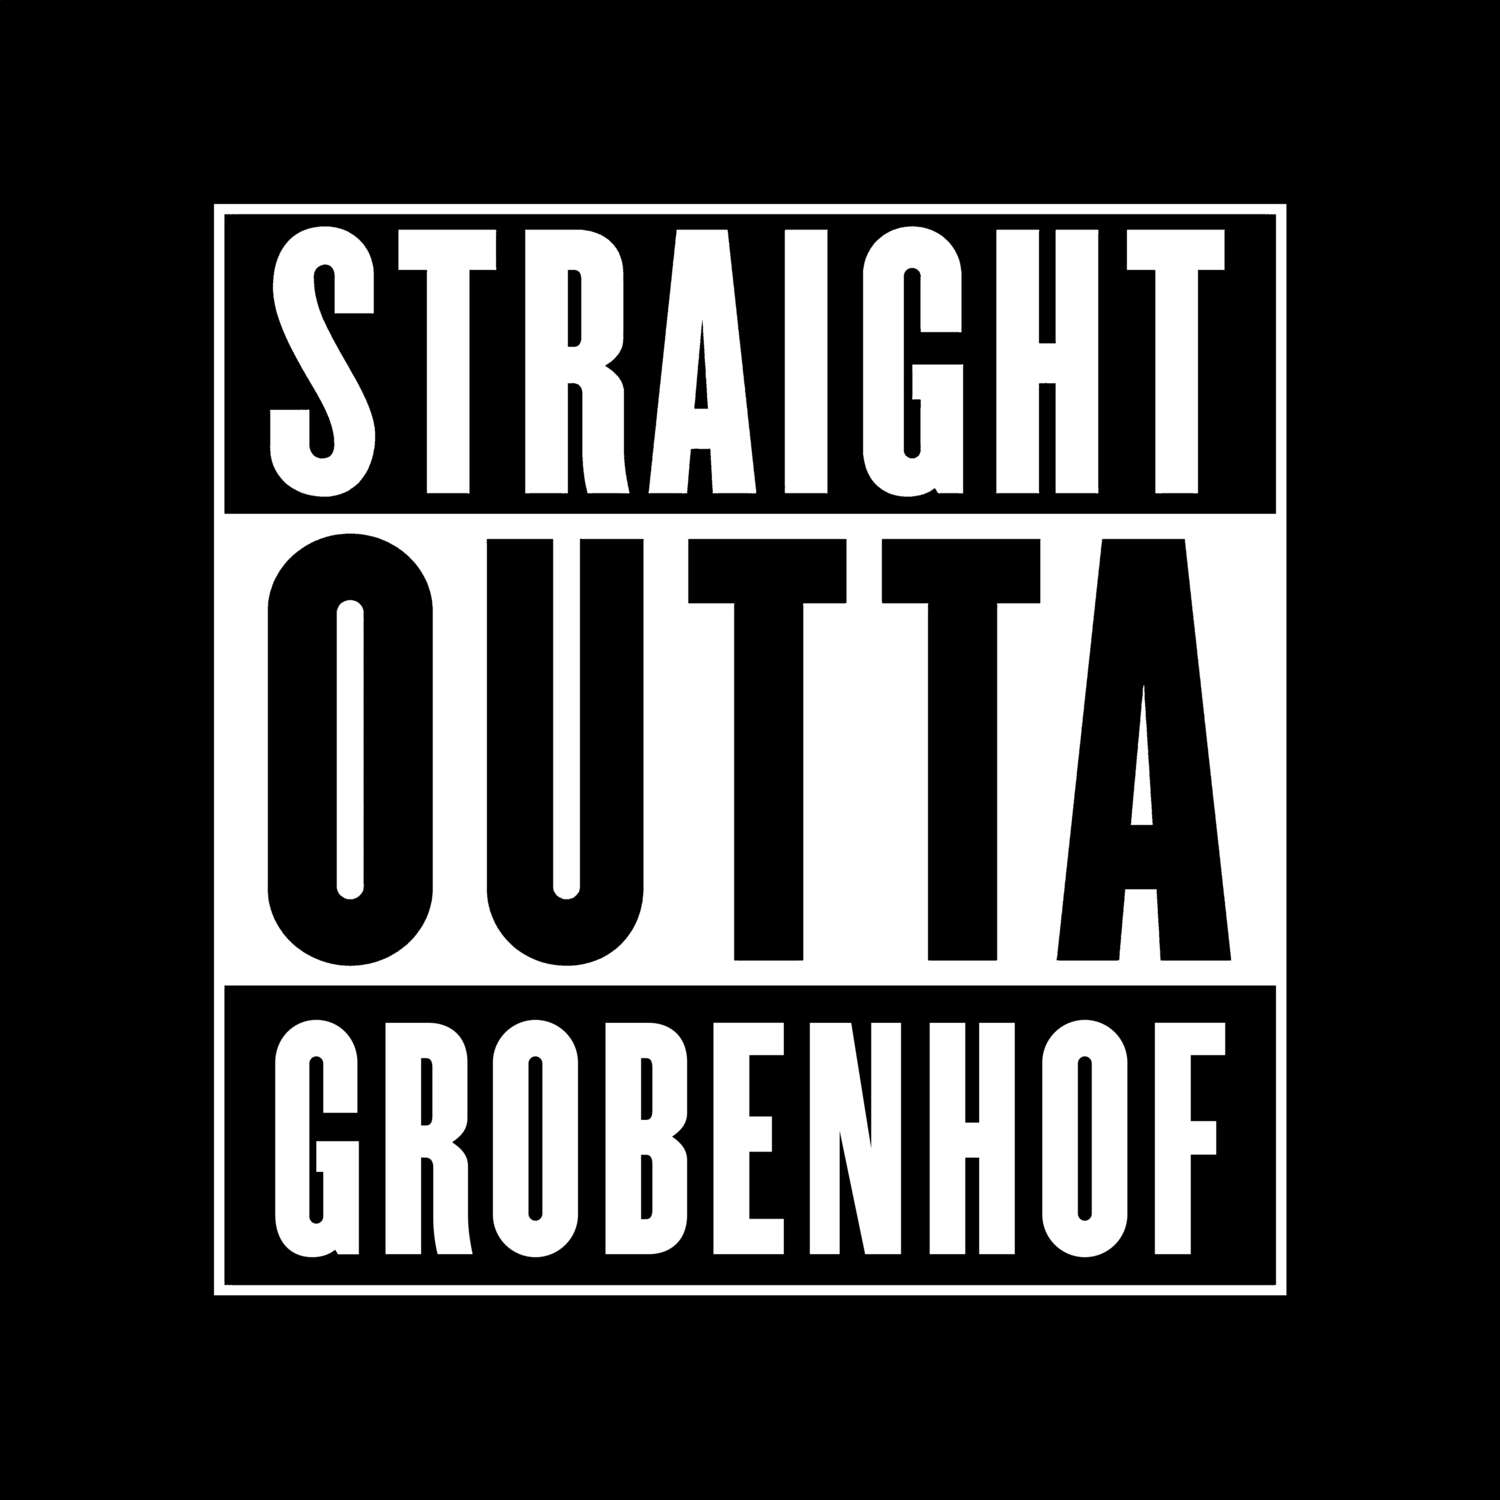 Grobenhof T-Shirt »Straight Outta«